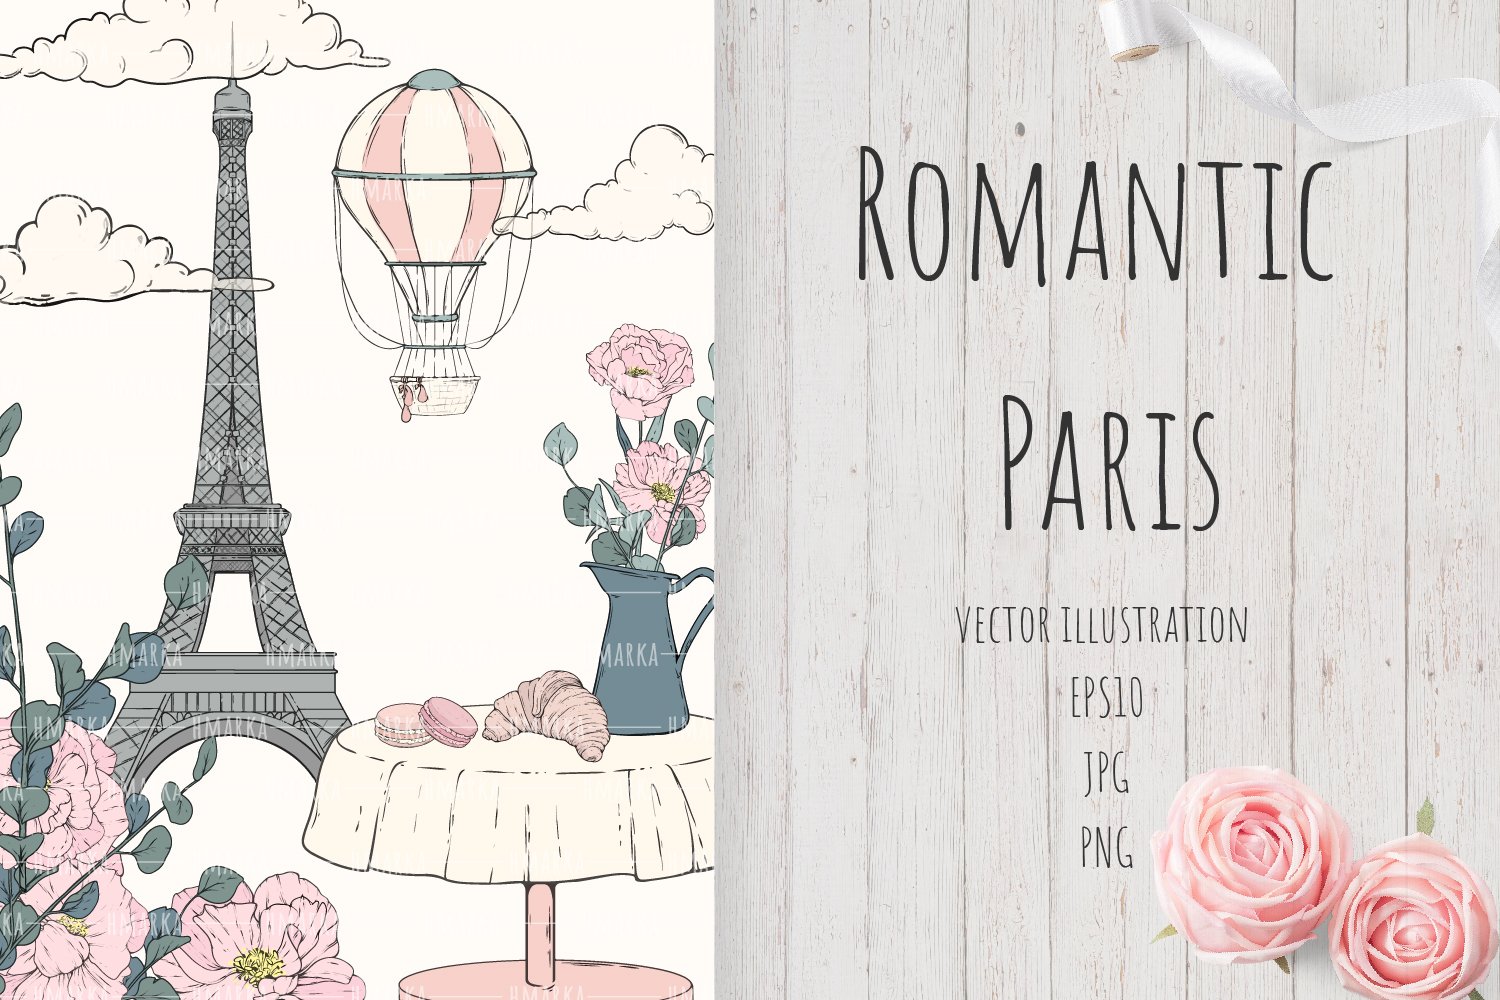 Romantic Paris Card#2 cover image.